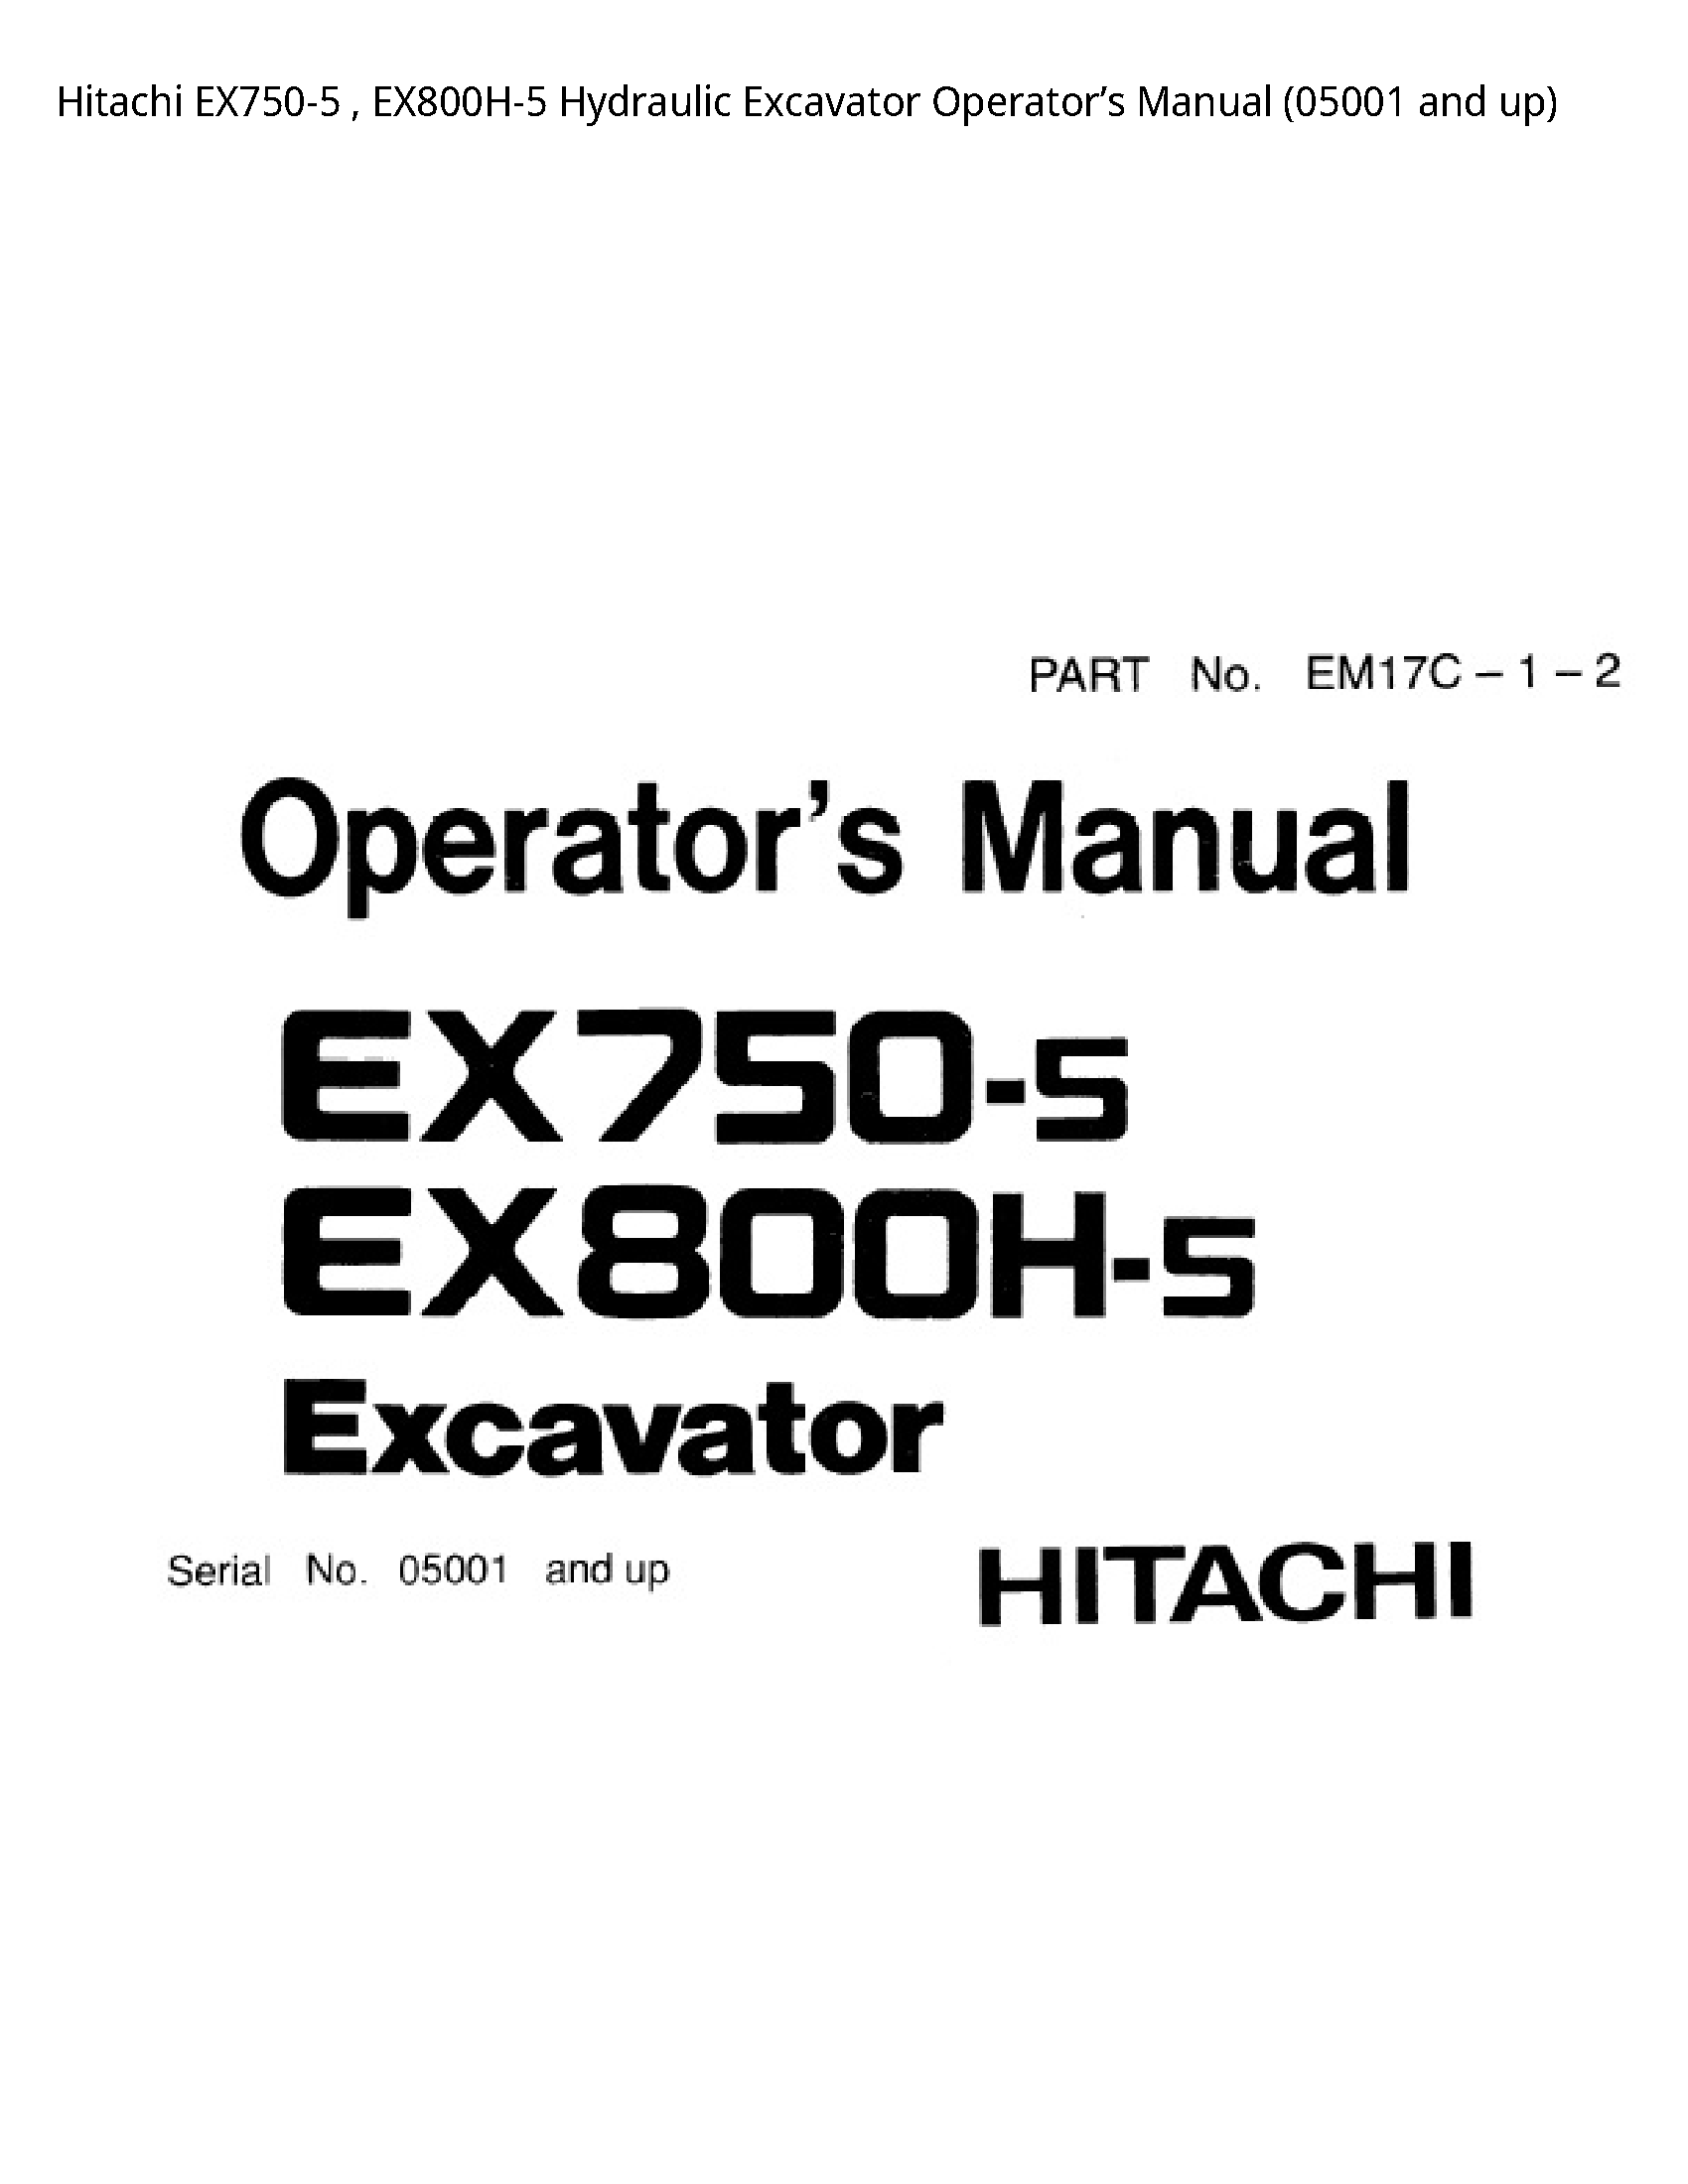 Hitachi EX750-5 Hydraulic Excavator Operator’s manual